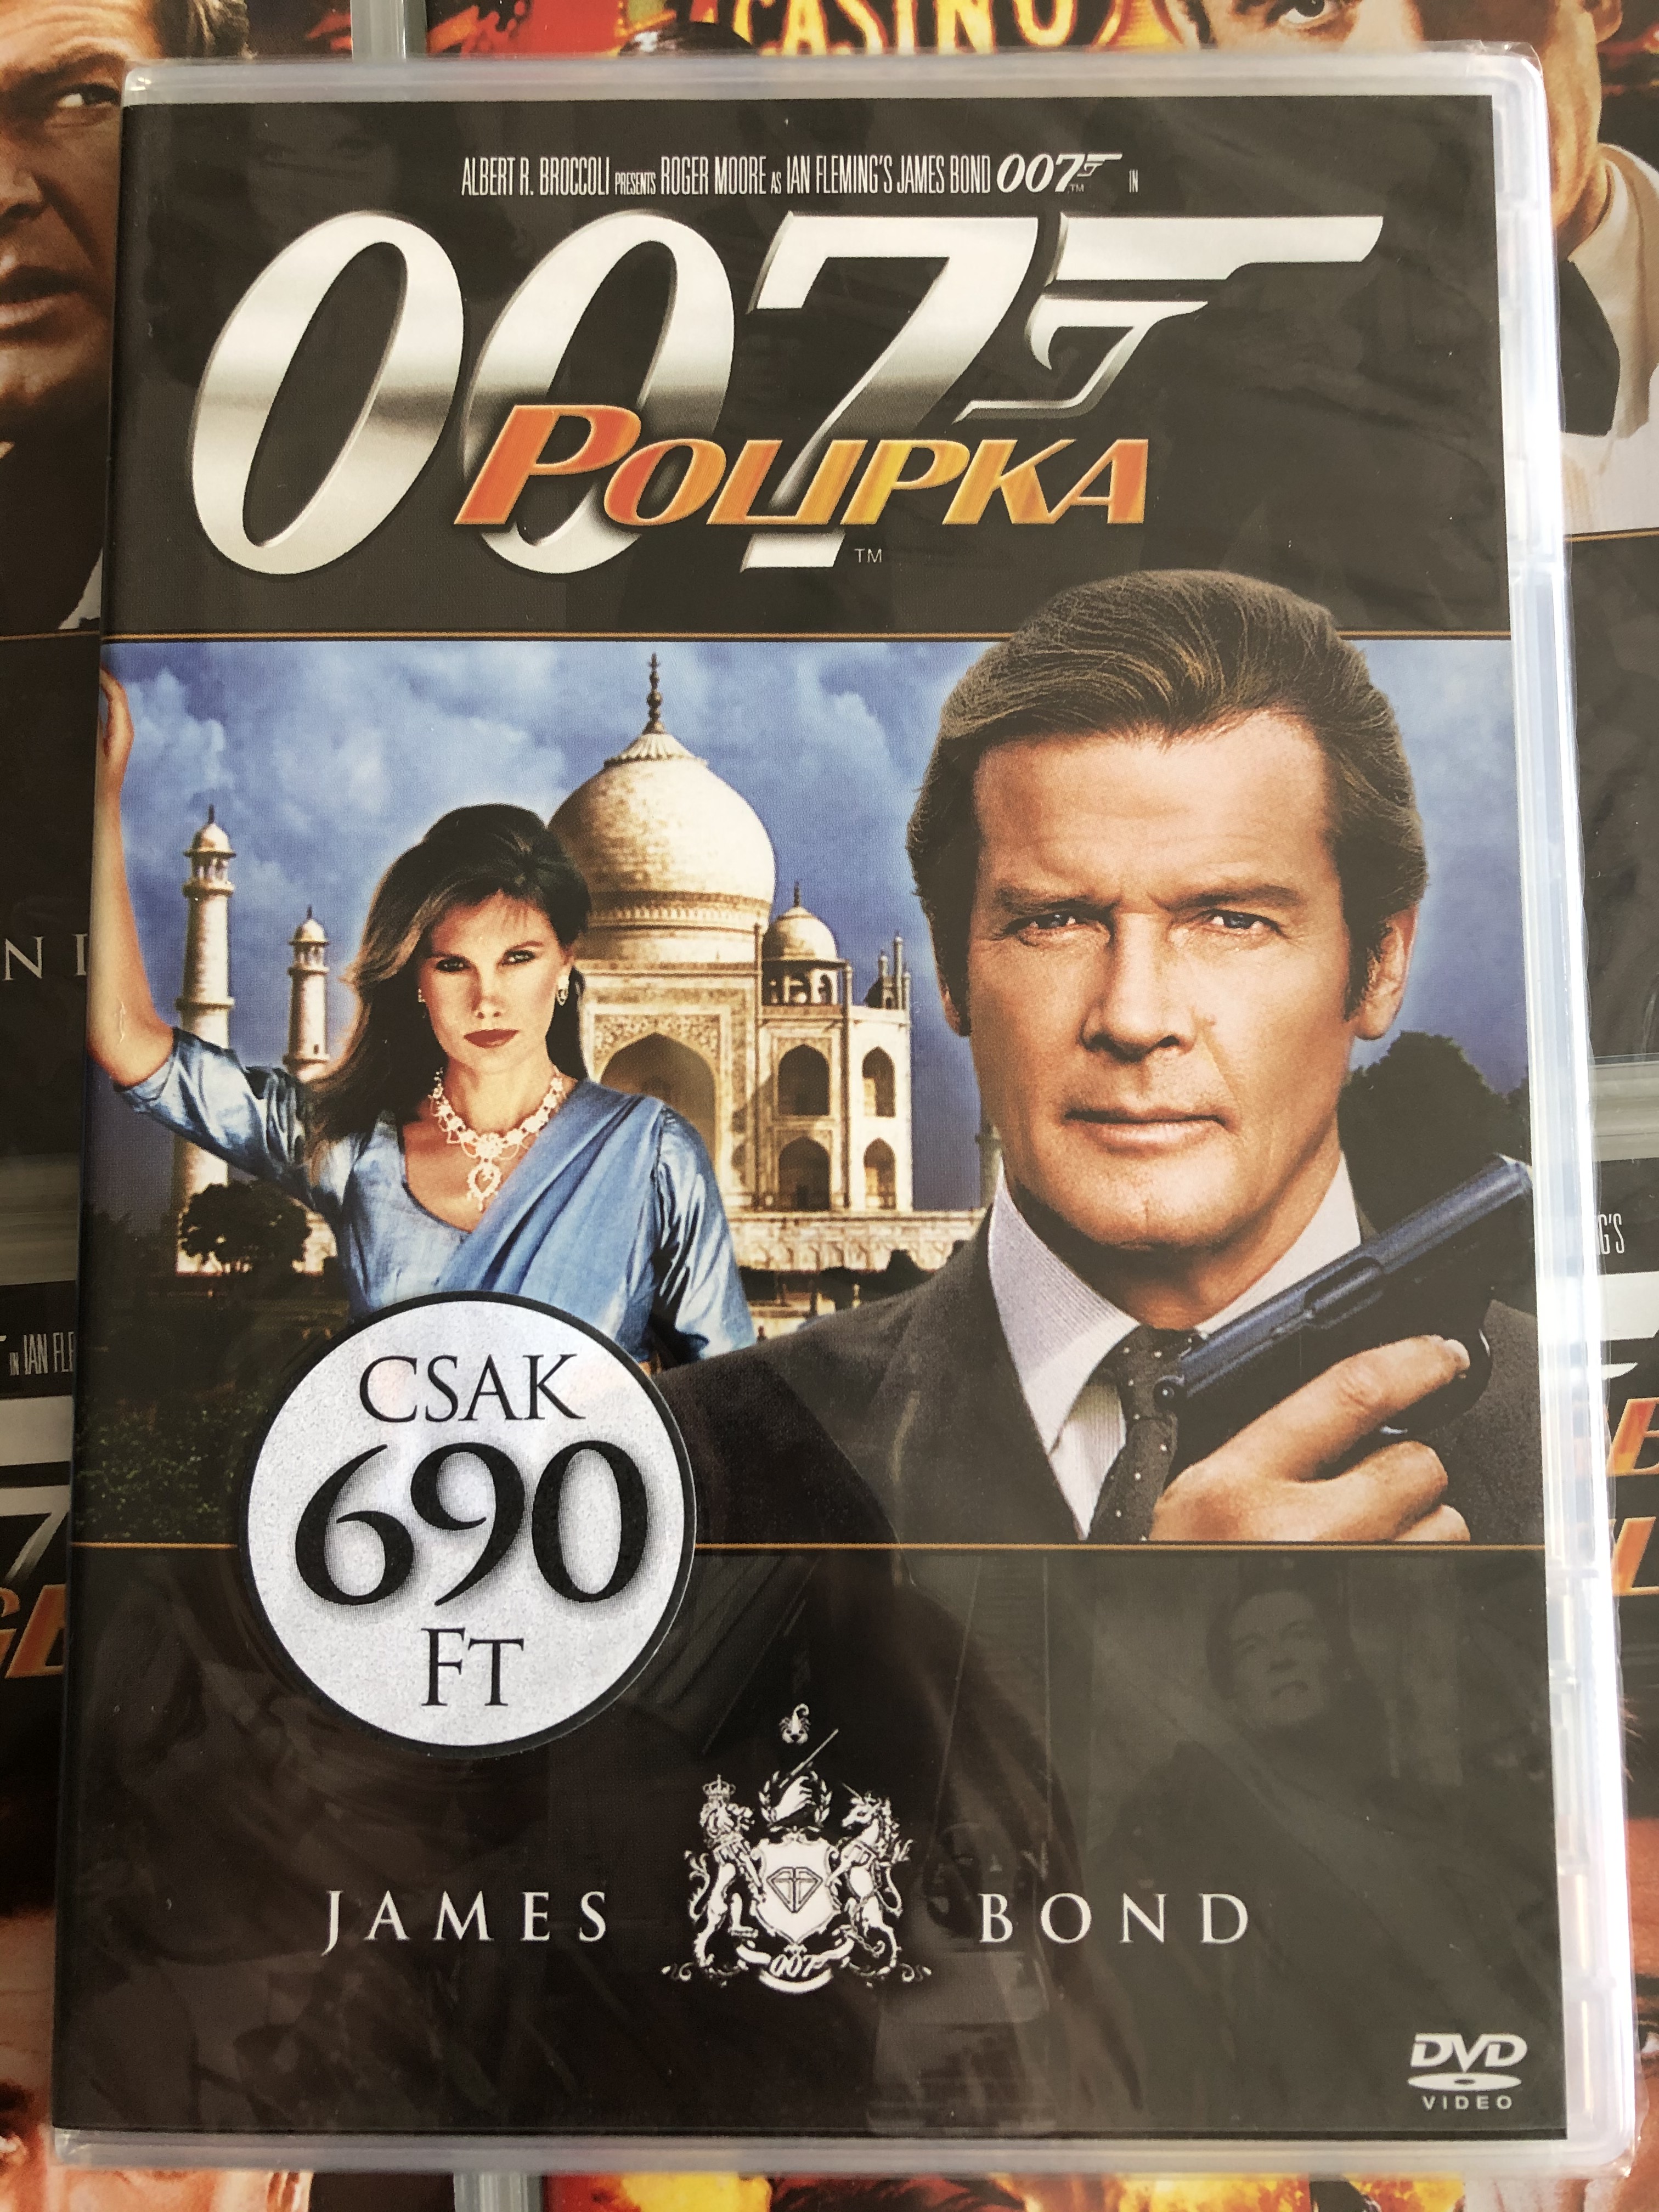 James Bond 007 - Octopussy DVD 1983 James Bond - Polipka 1.JPG